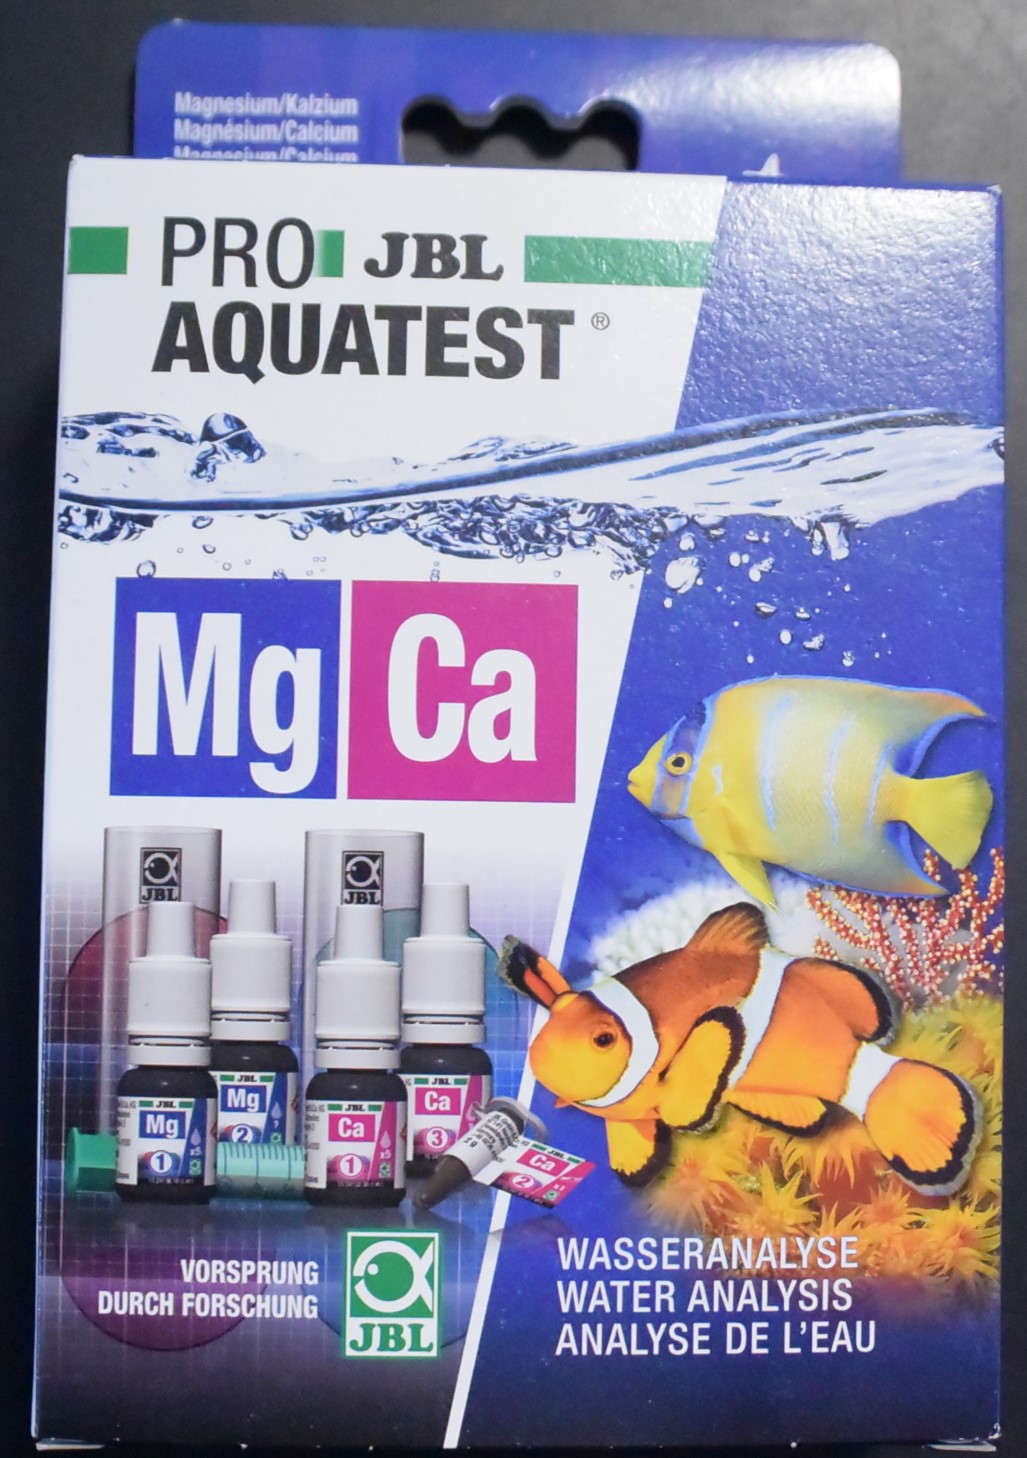 Onderstrepen Statistisch schrobben Magnesium/Kalzium Aquatest JBL | korallen-zucht.de